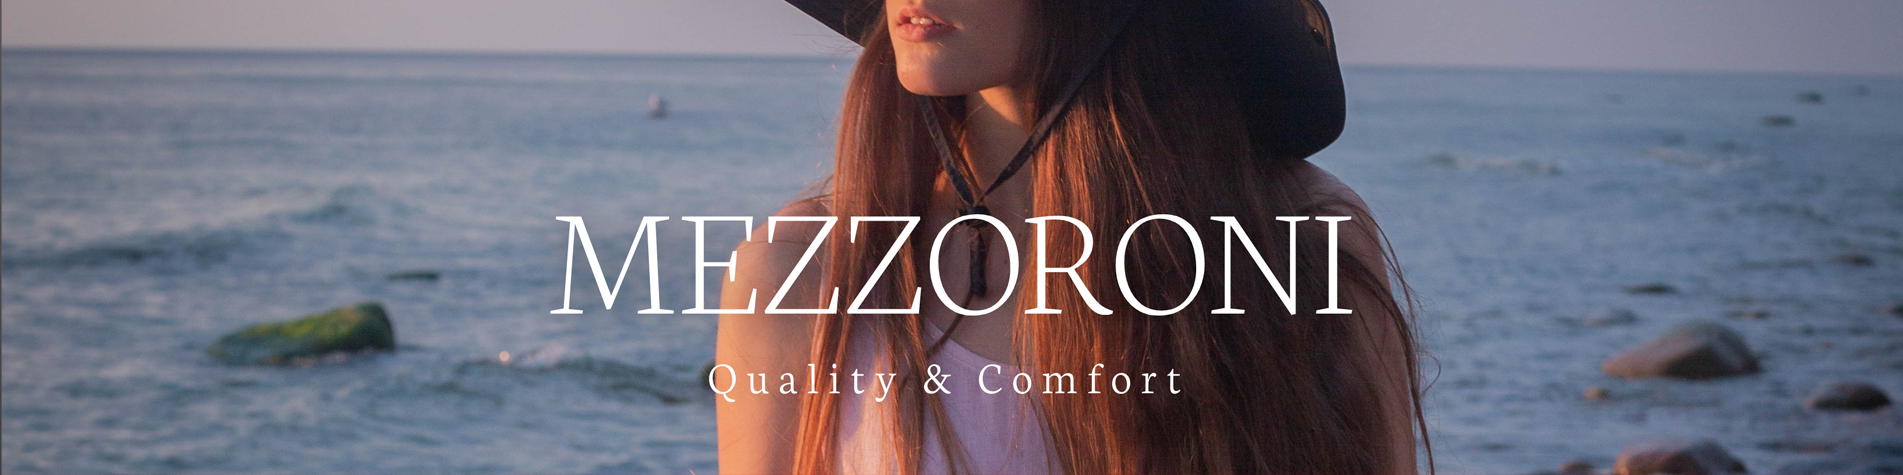 Mezzoroni new linen clothes collection promotion